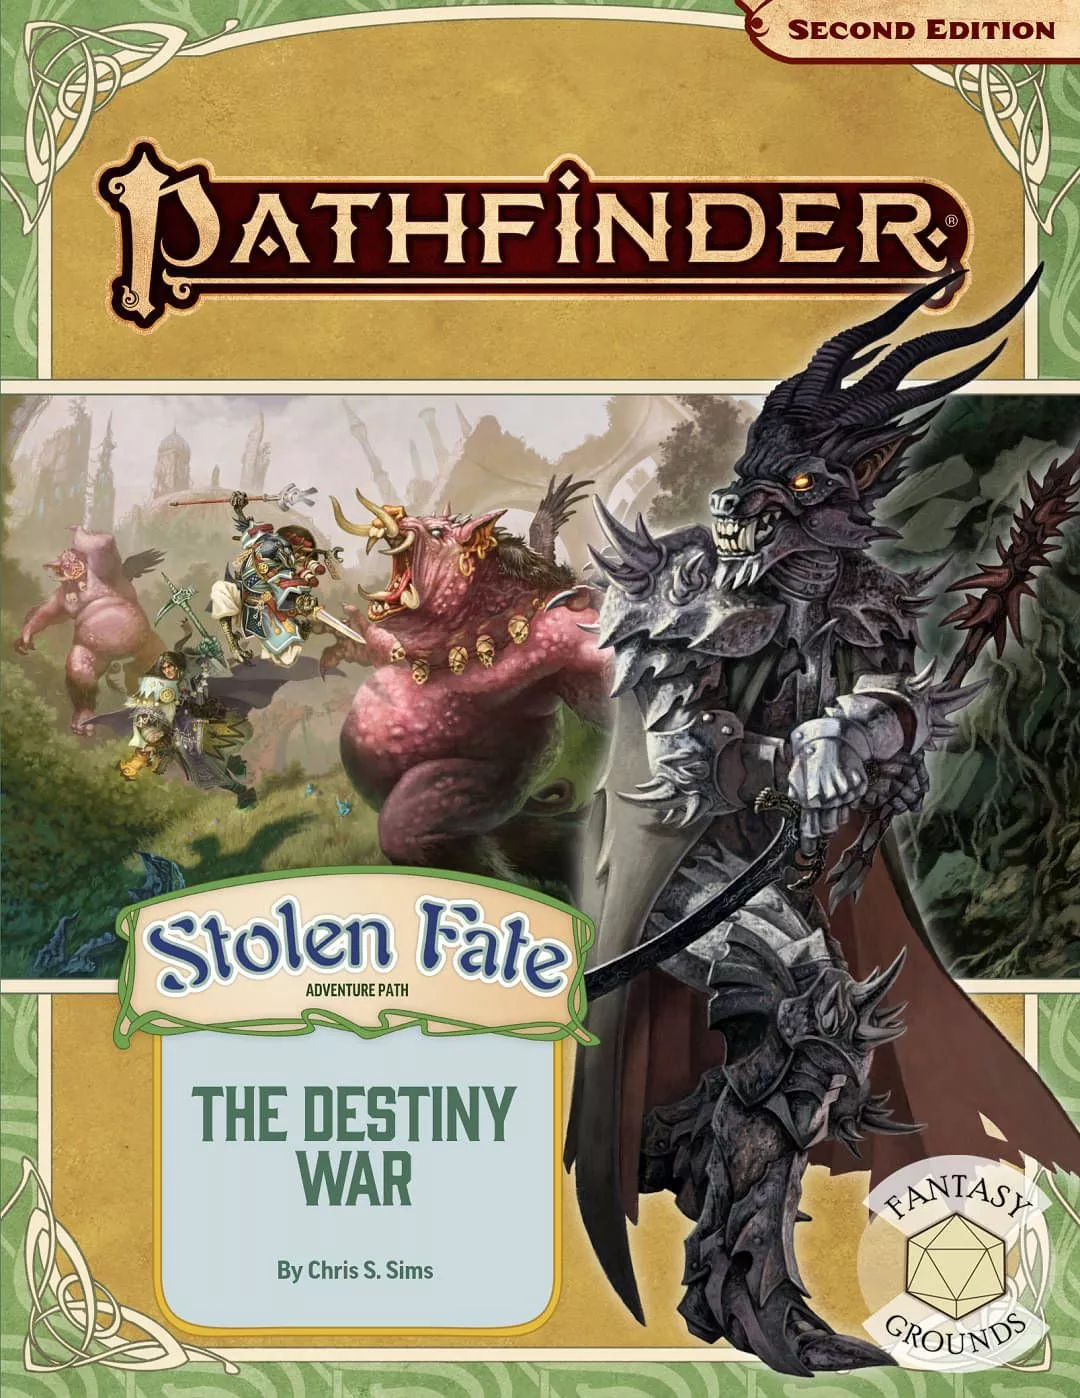 Pathfinder 2 RPG - Stolen Fate AP 2: The Destiny War for Fantasy Grounds